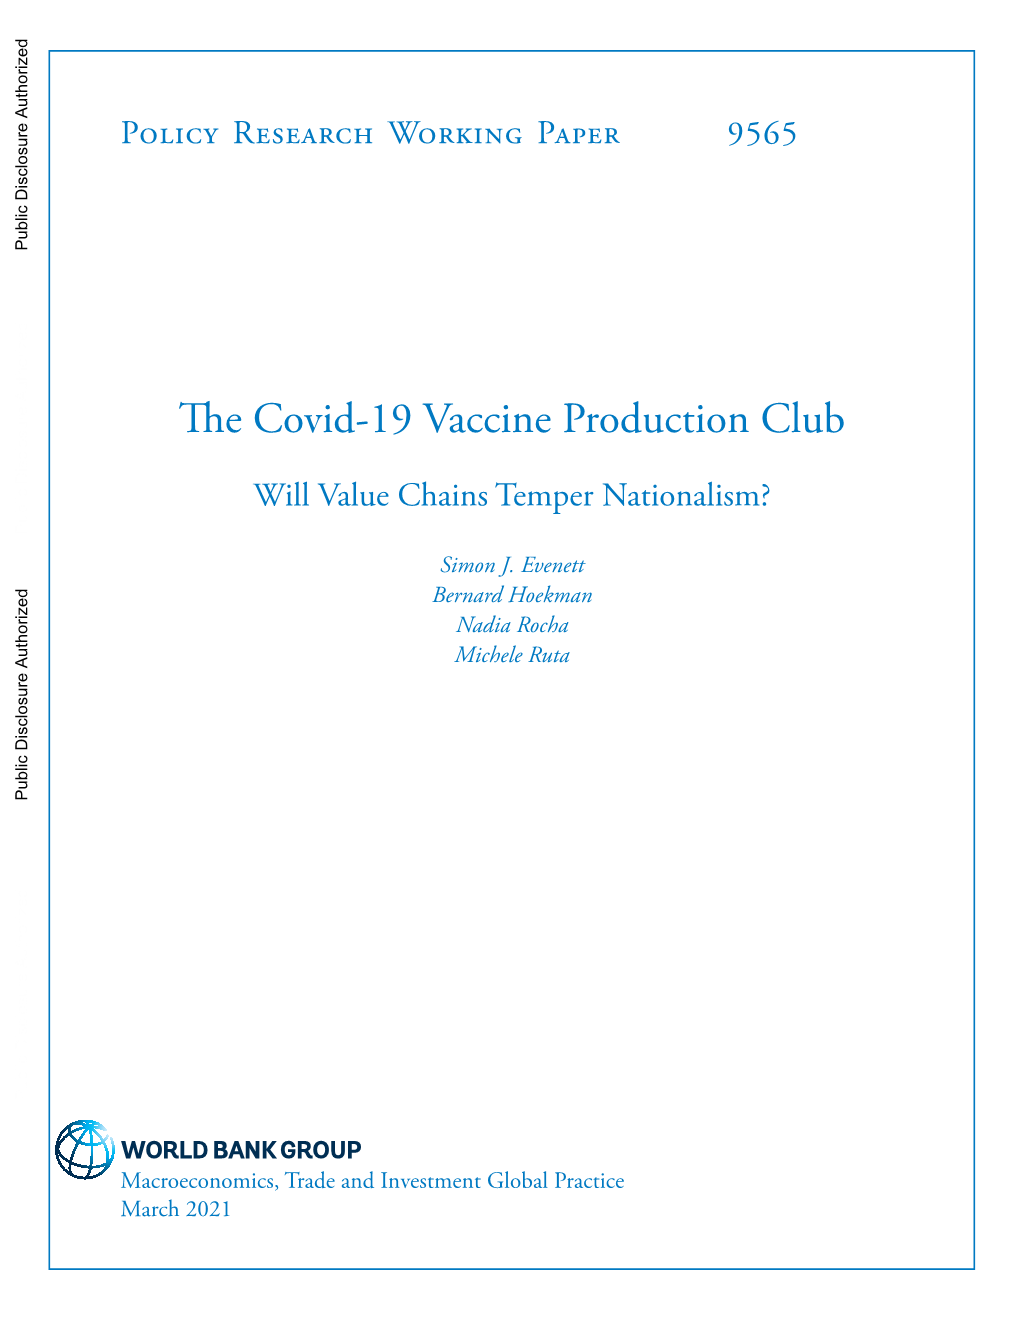 The Covid-19 Vaccine Production Club